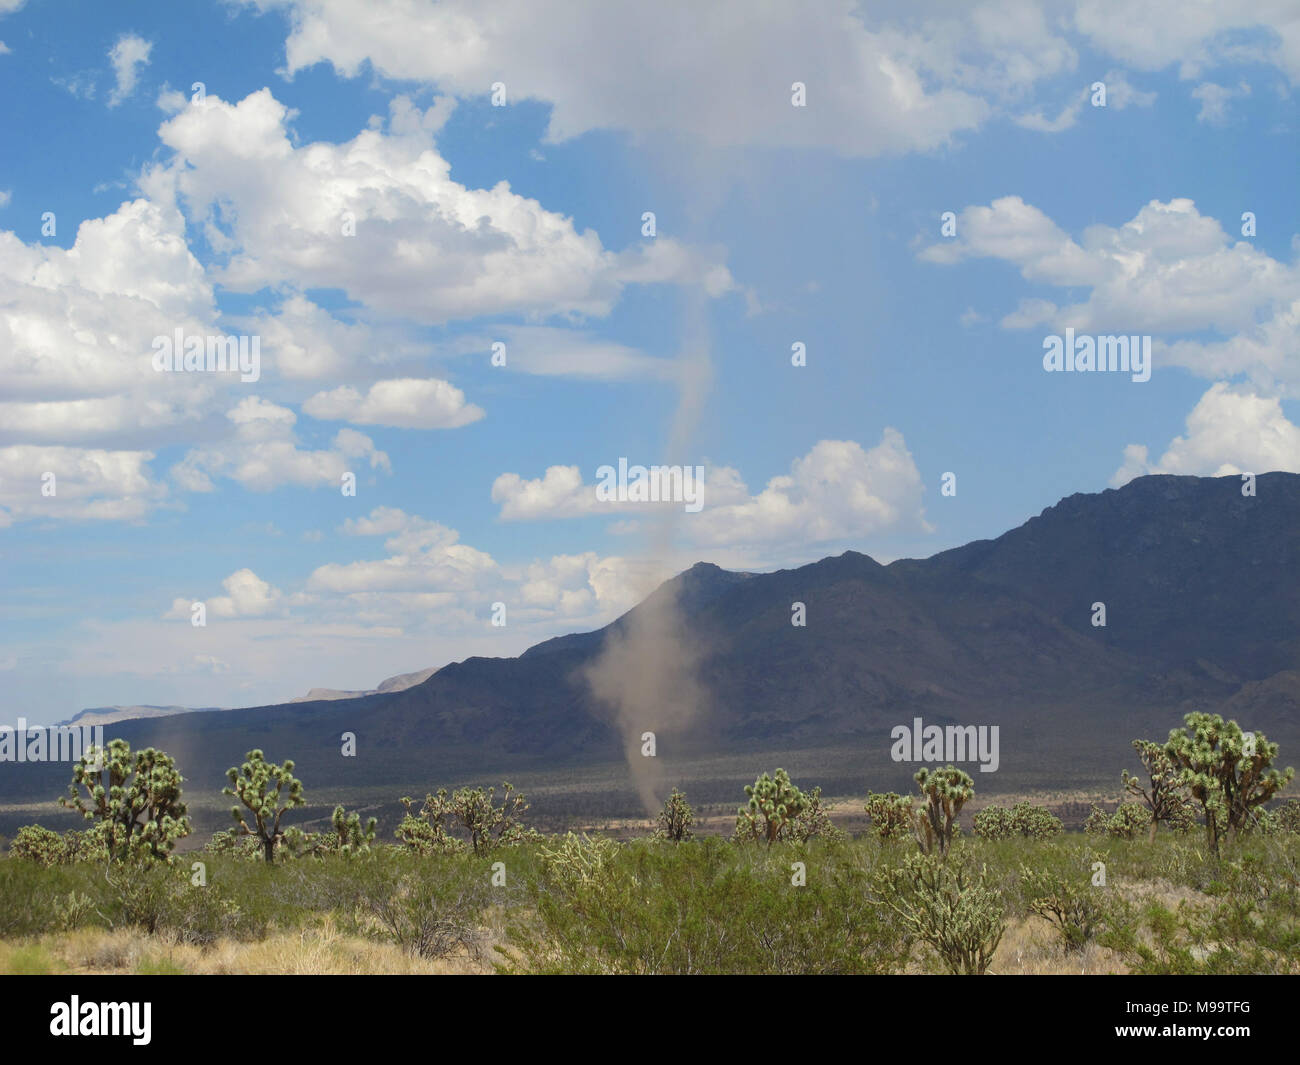 Dust devils (whirlwinds) at Arizona. Stock Photo